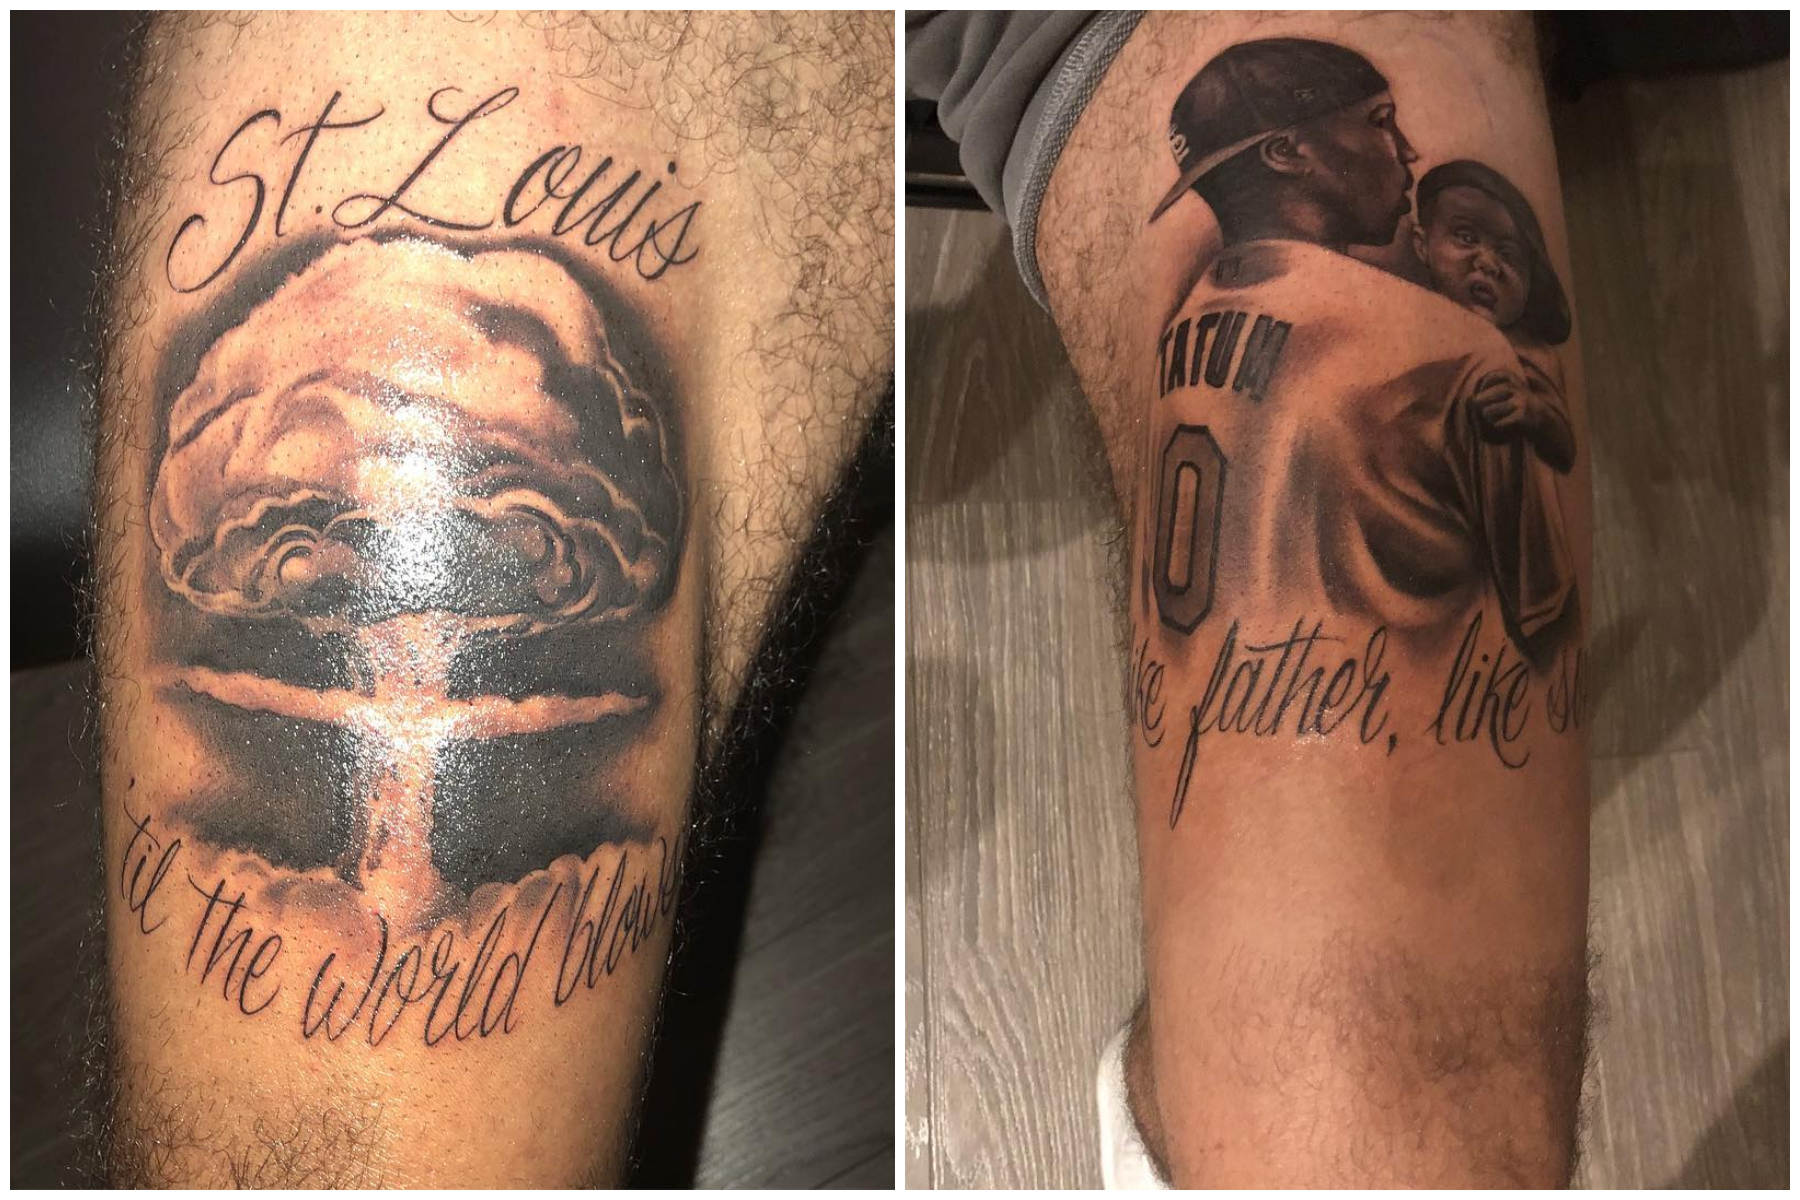 Jayson Tatums New Tattoo Contains an Unfortunate Error